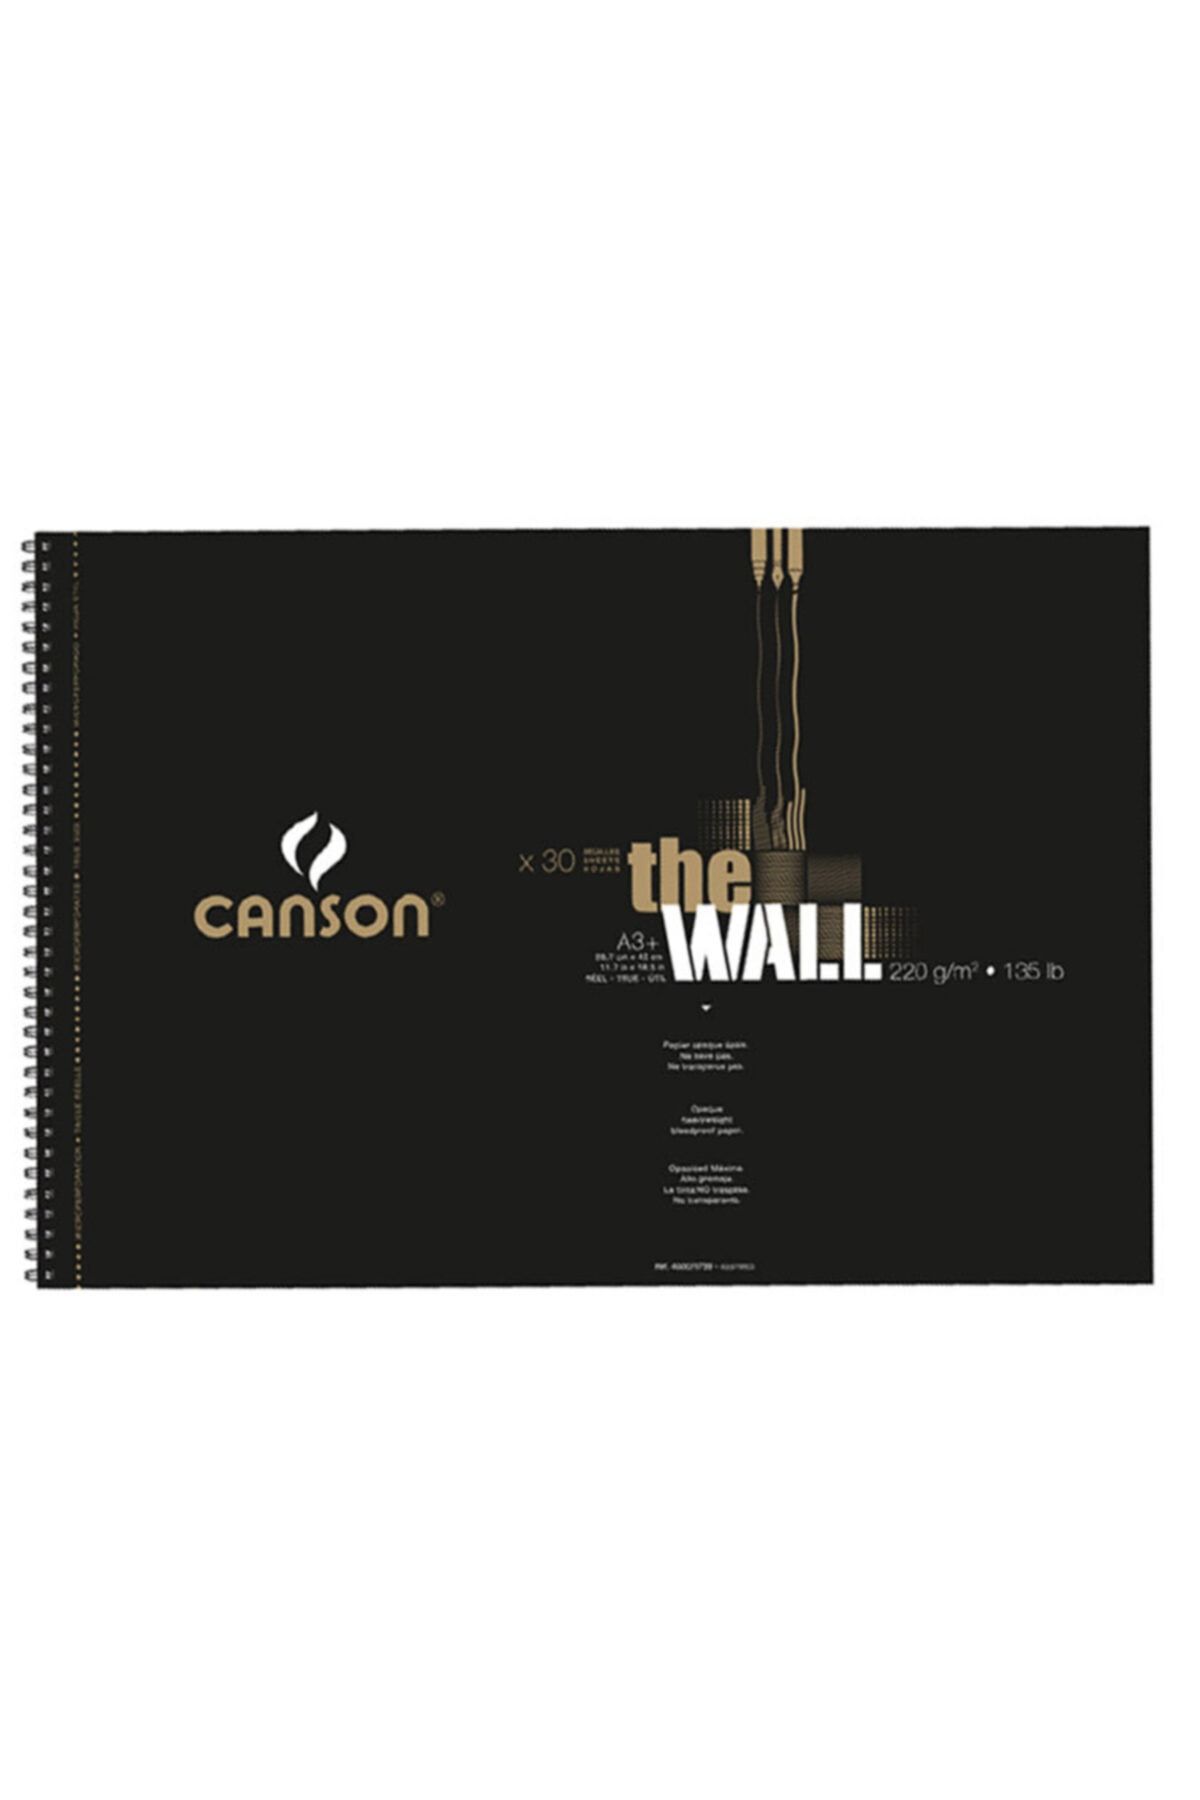 Canson The Wall Albüm 220g 30 Yaprak A3